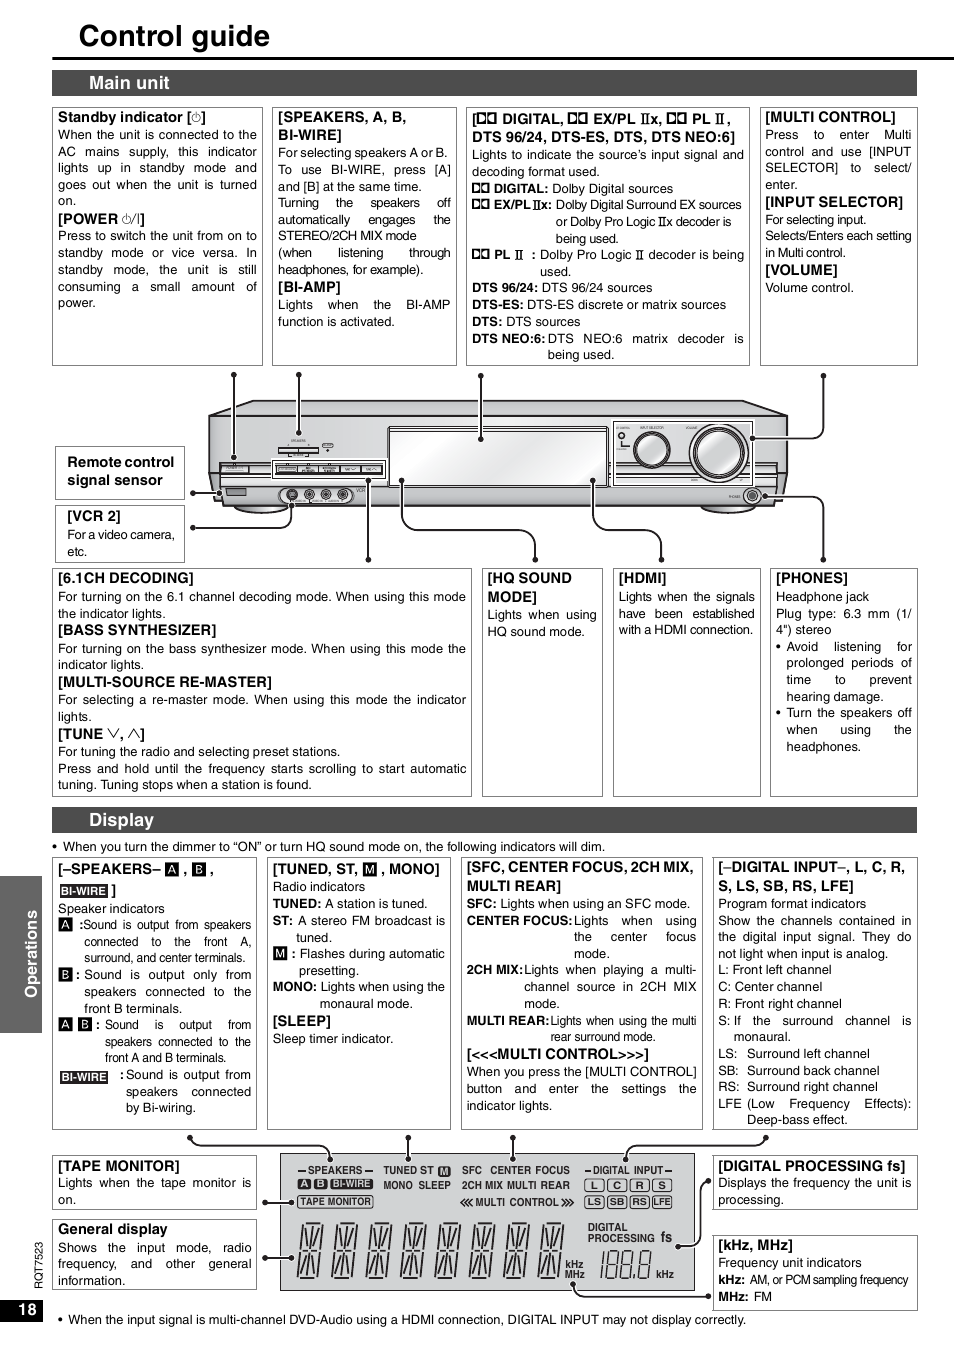 Operations, Control guide, Main unit | Panasonic SA-XR70 EN User Manual |  Page 18 / 28 | Original mode